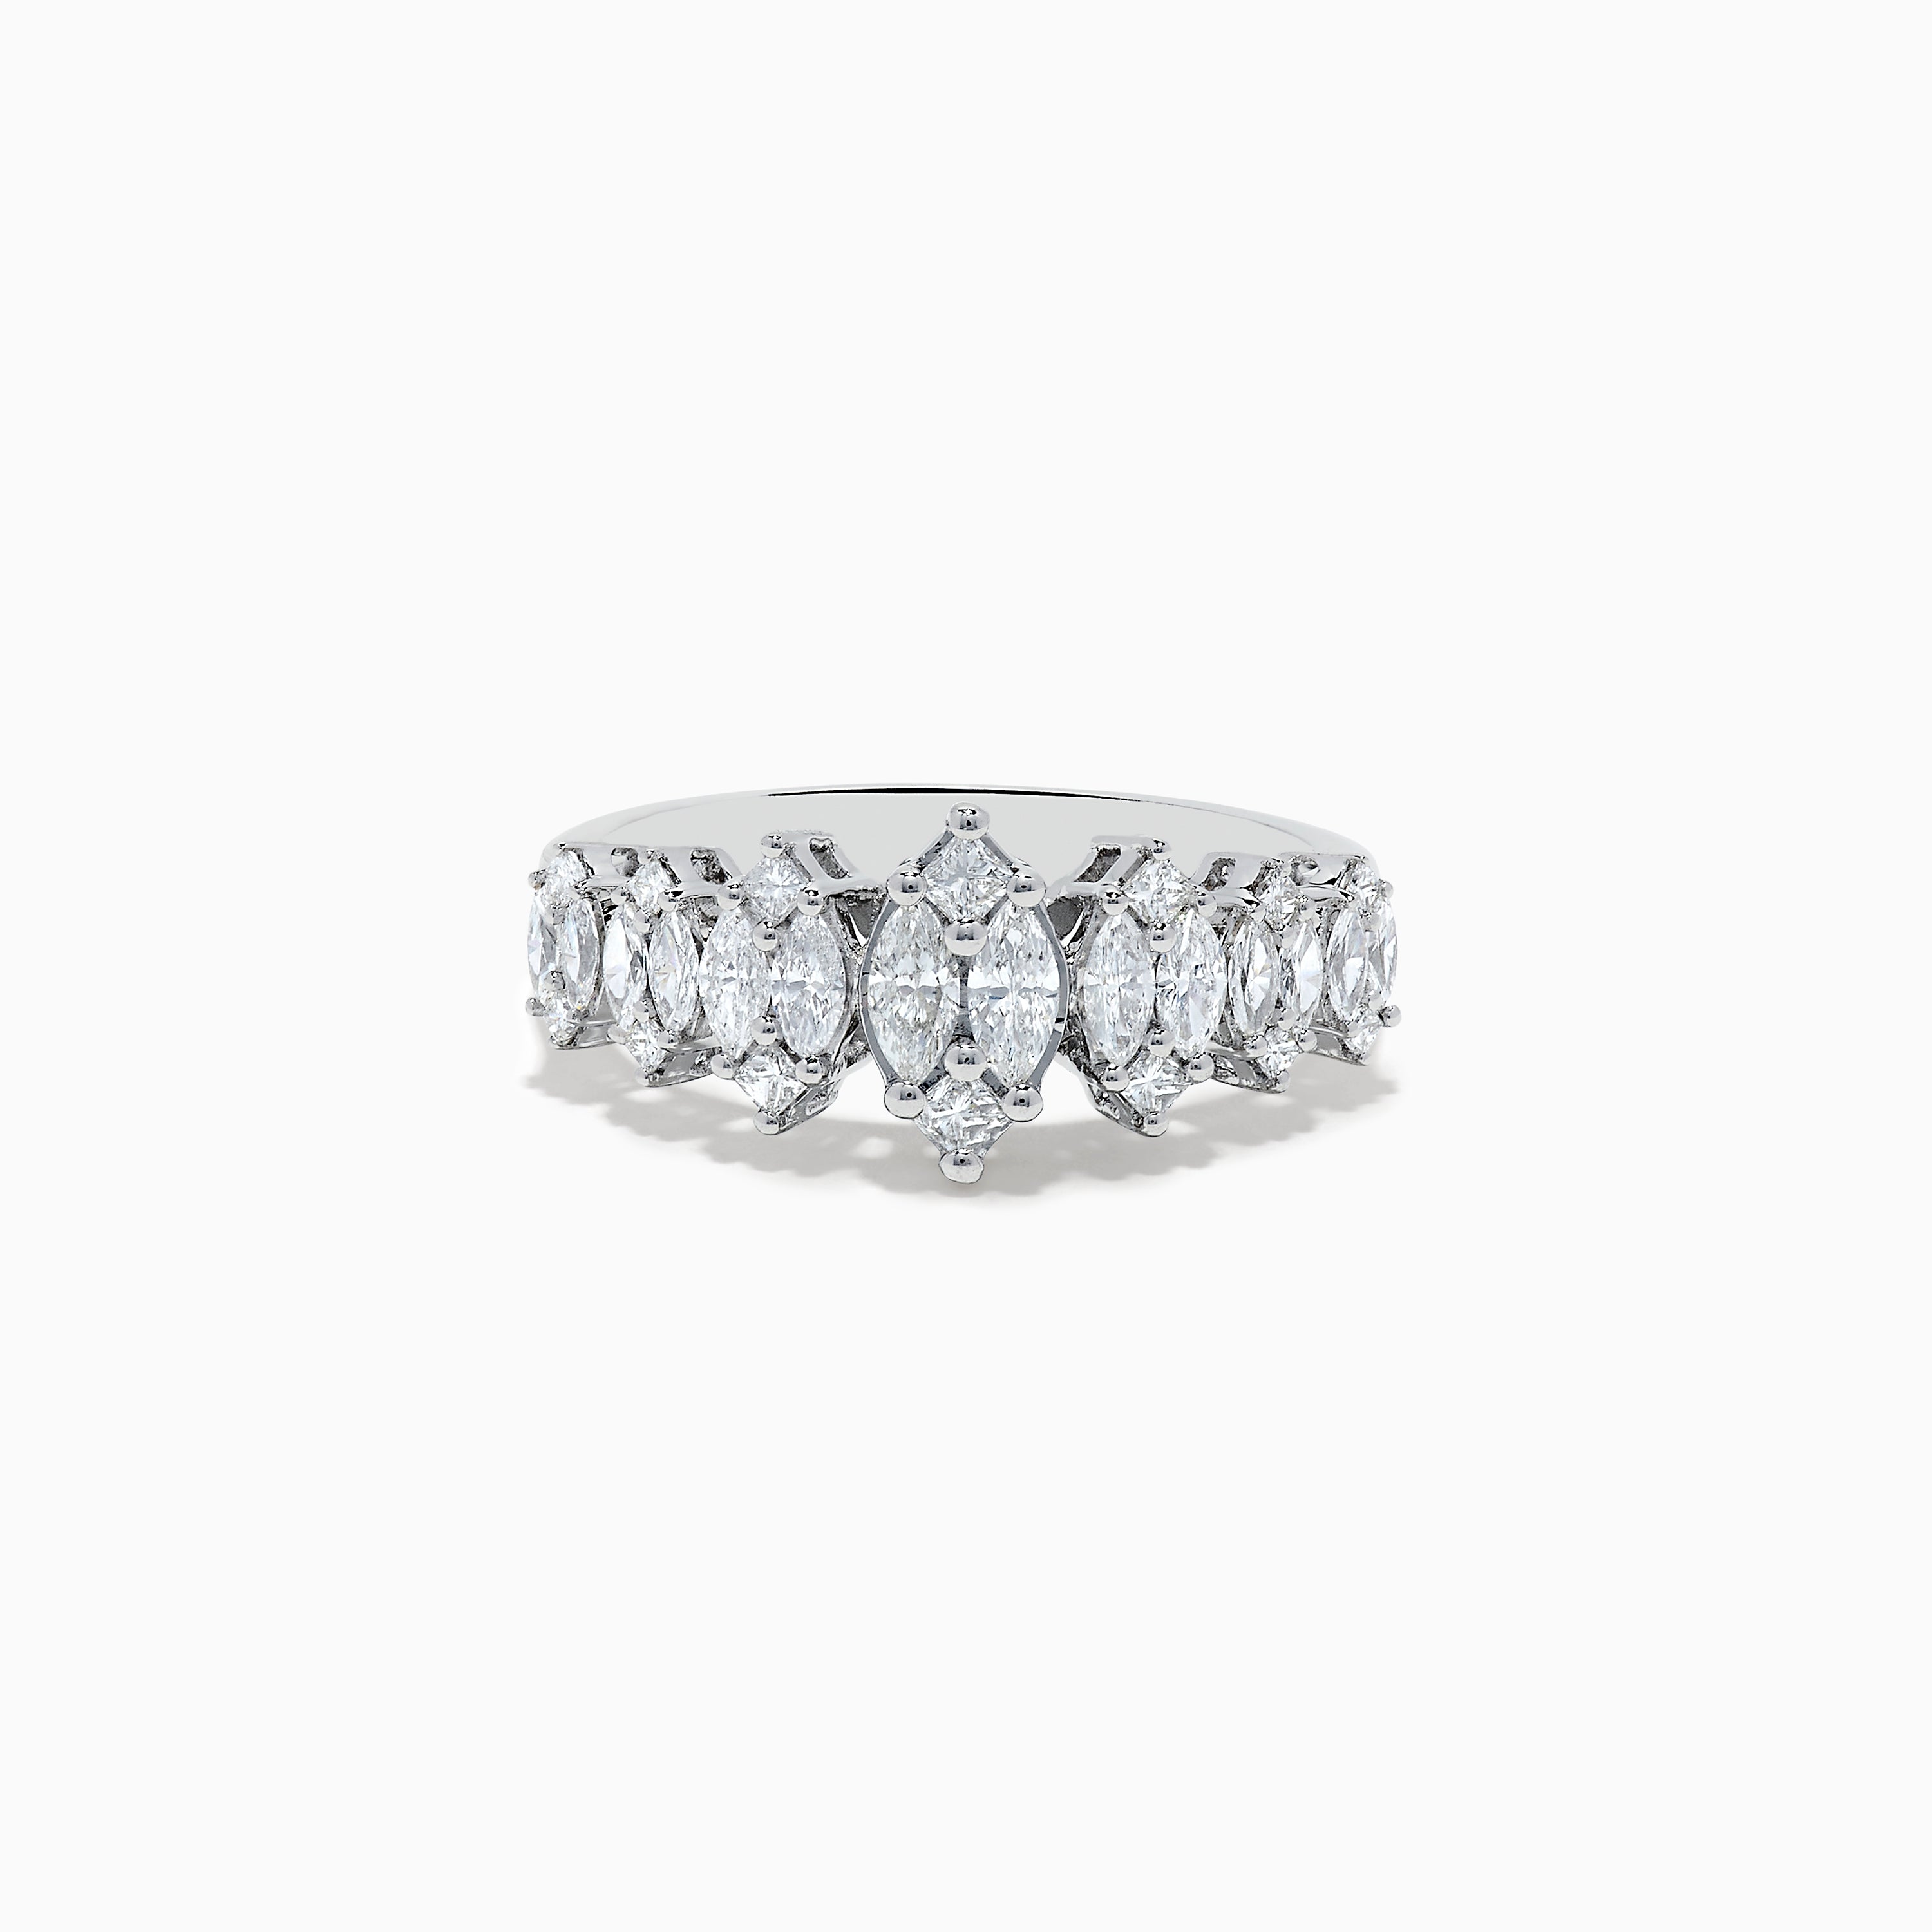 Effy 14K White Gold Diamond Ring